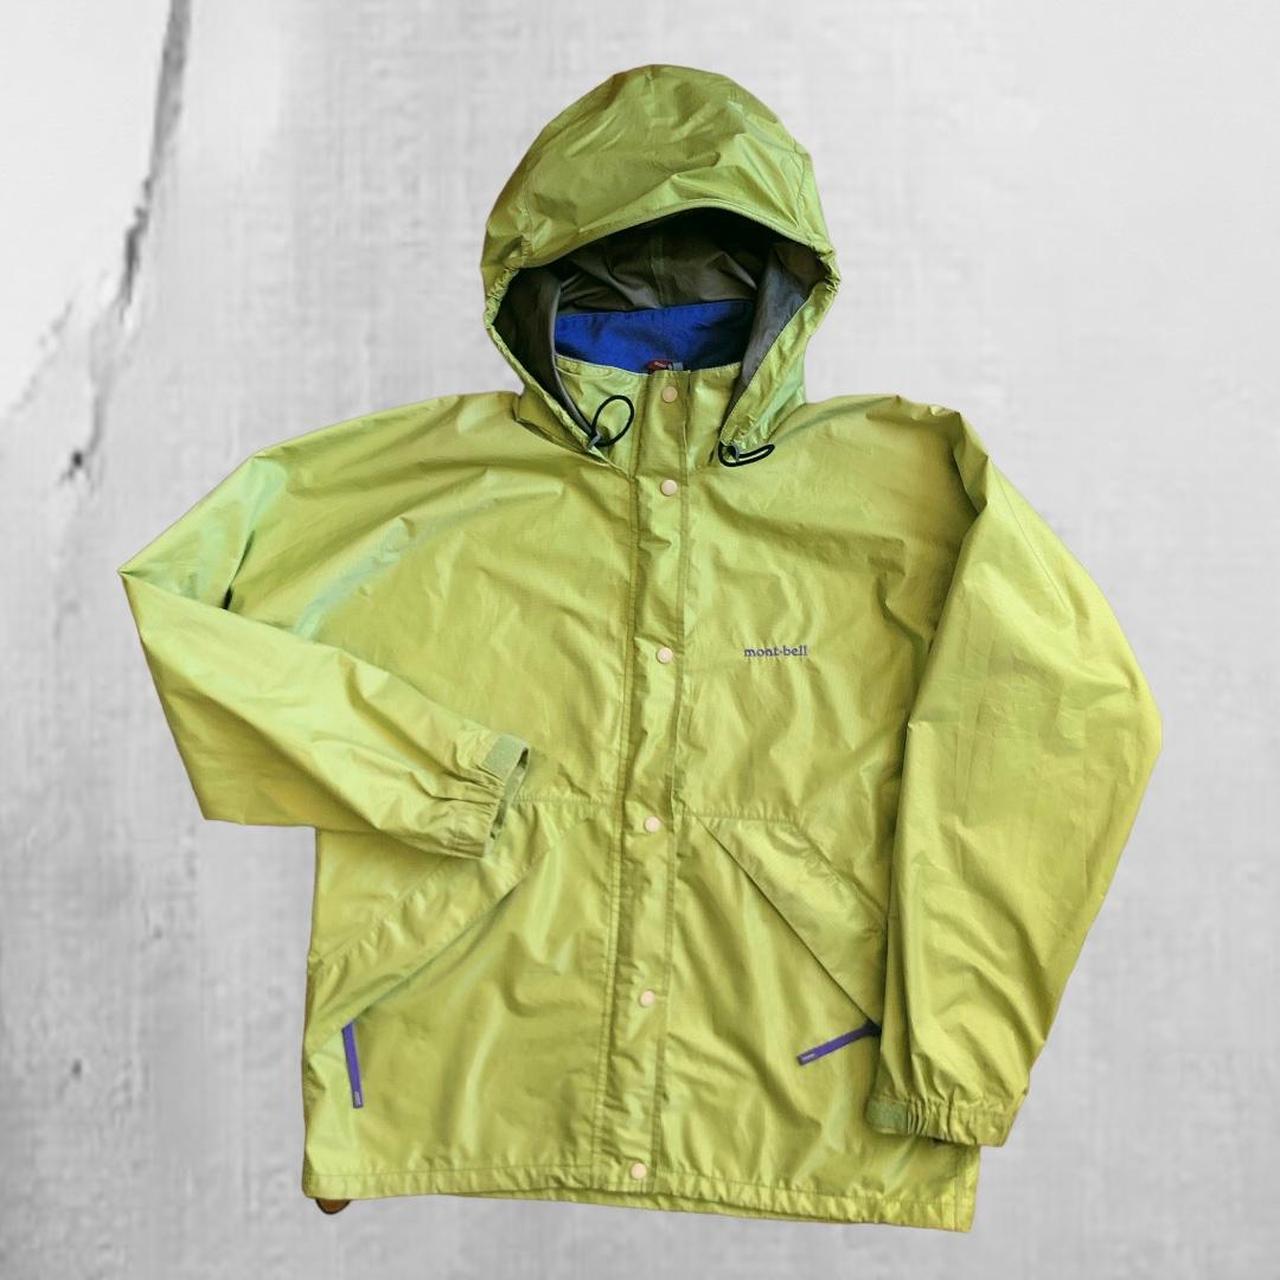 Men's Green and Yellow Jacket | Depop